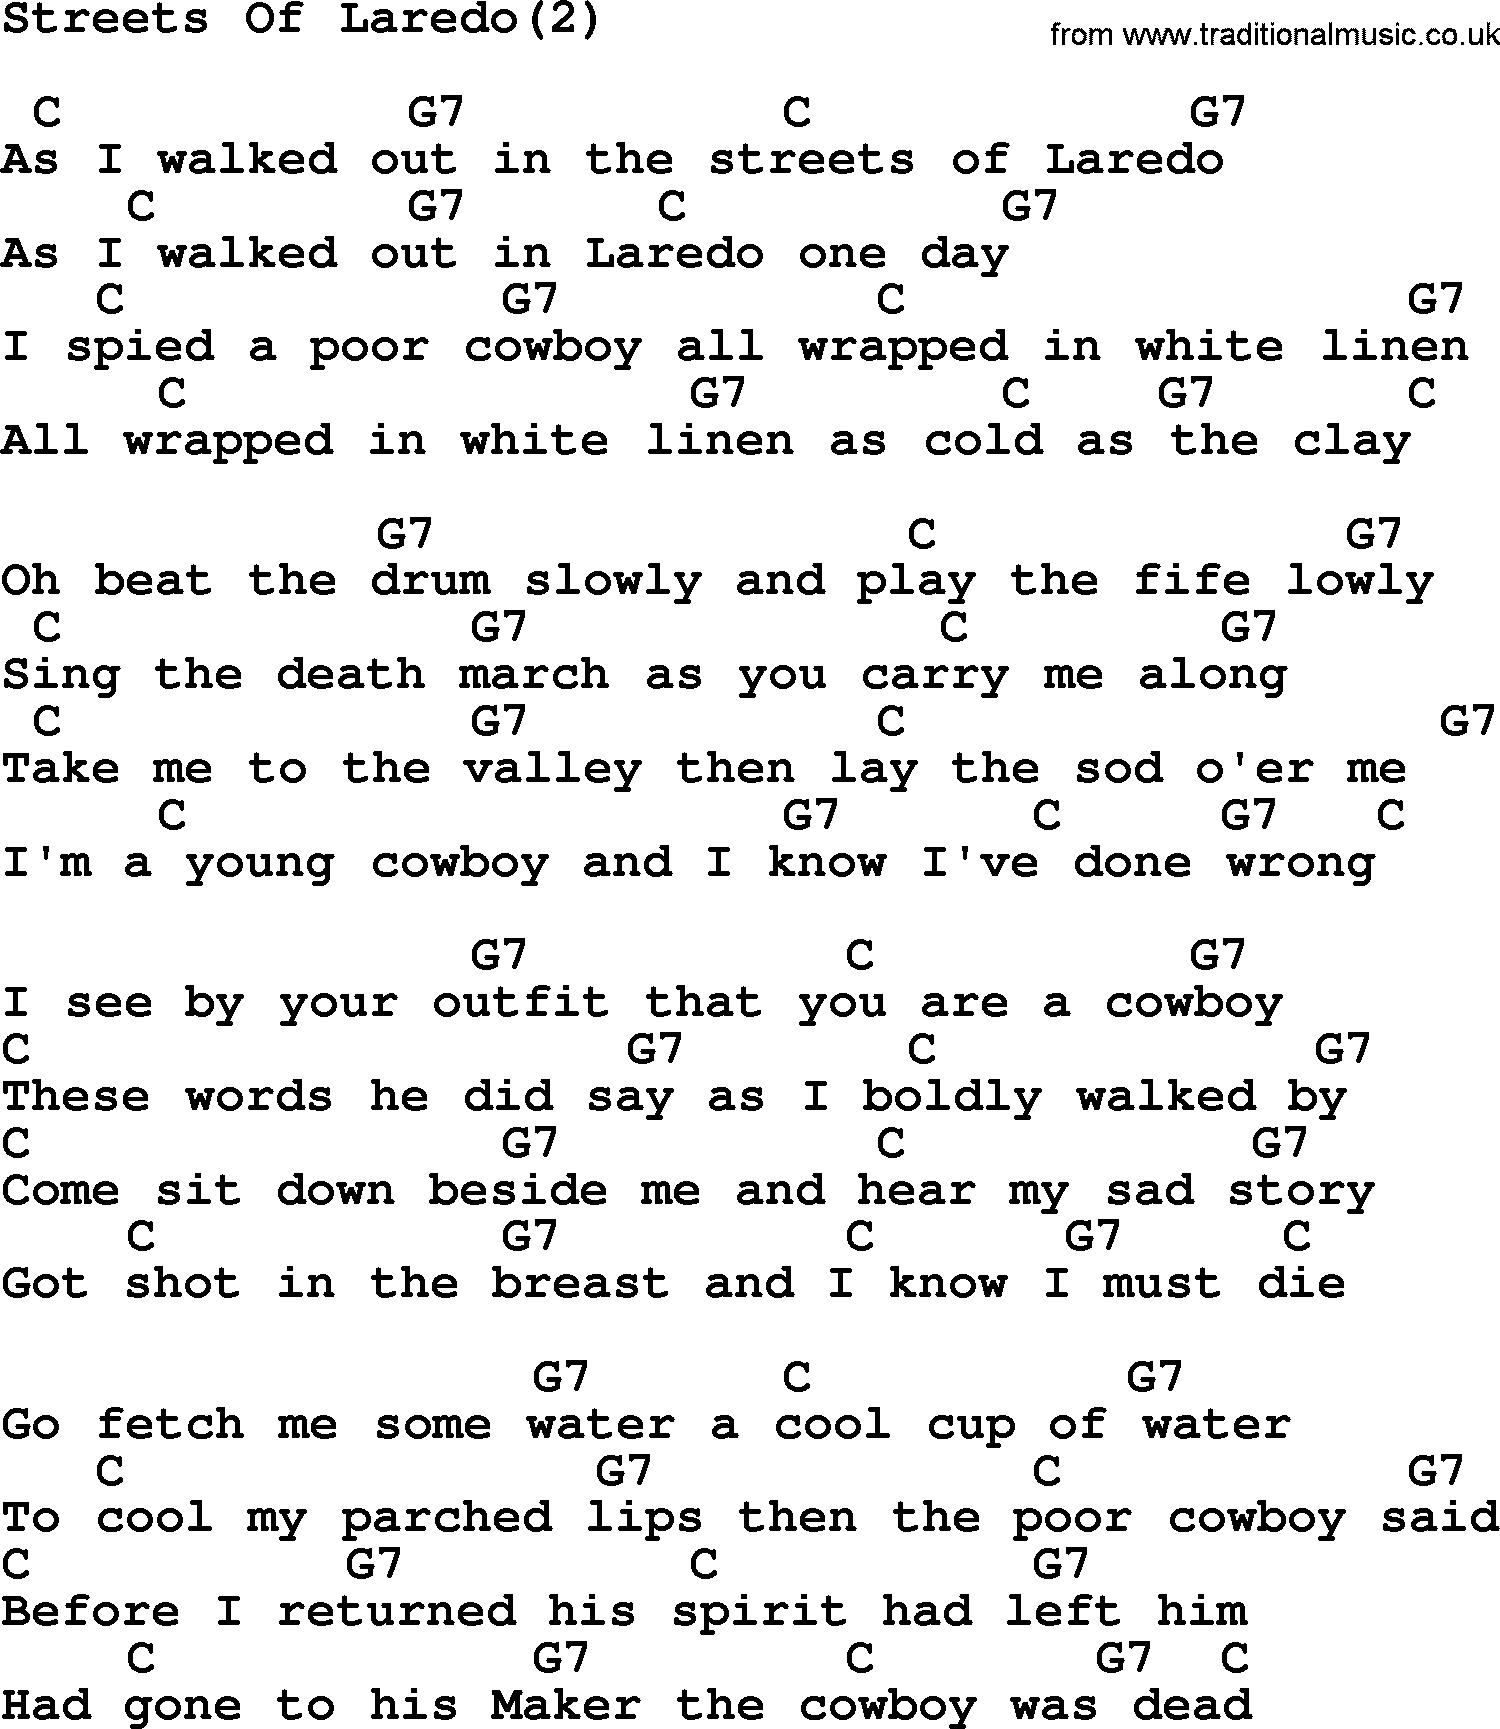 Johnny Cash Song Streets Of Laredo 2 Lyrics And Chords